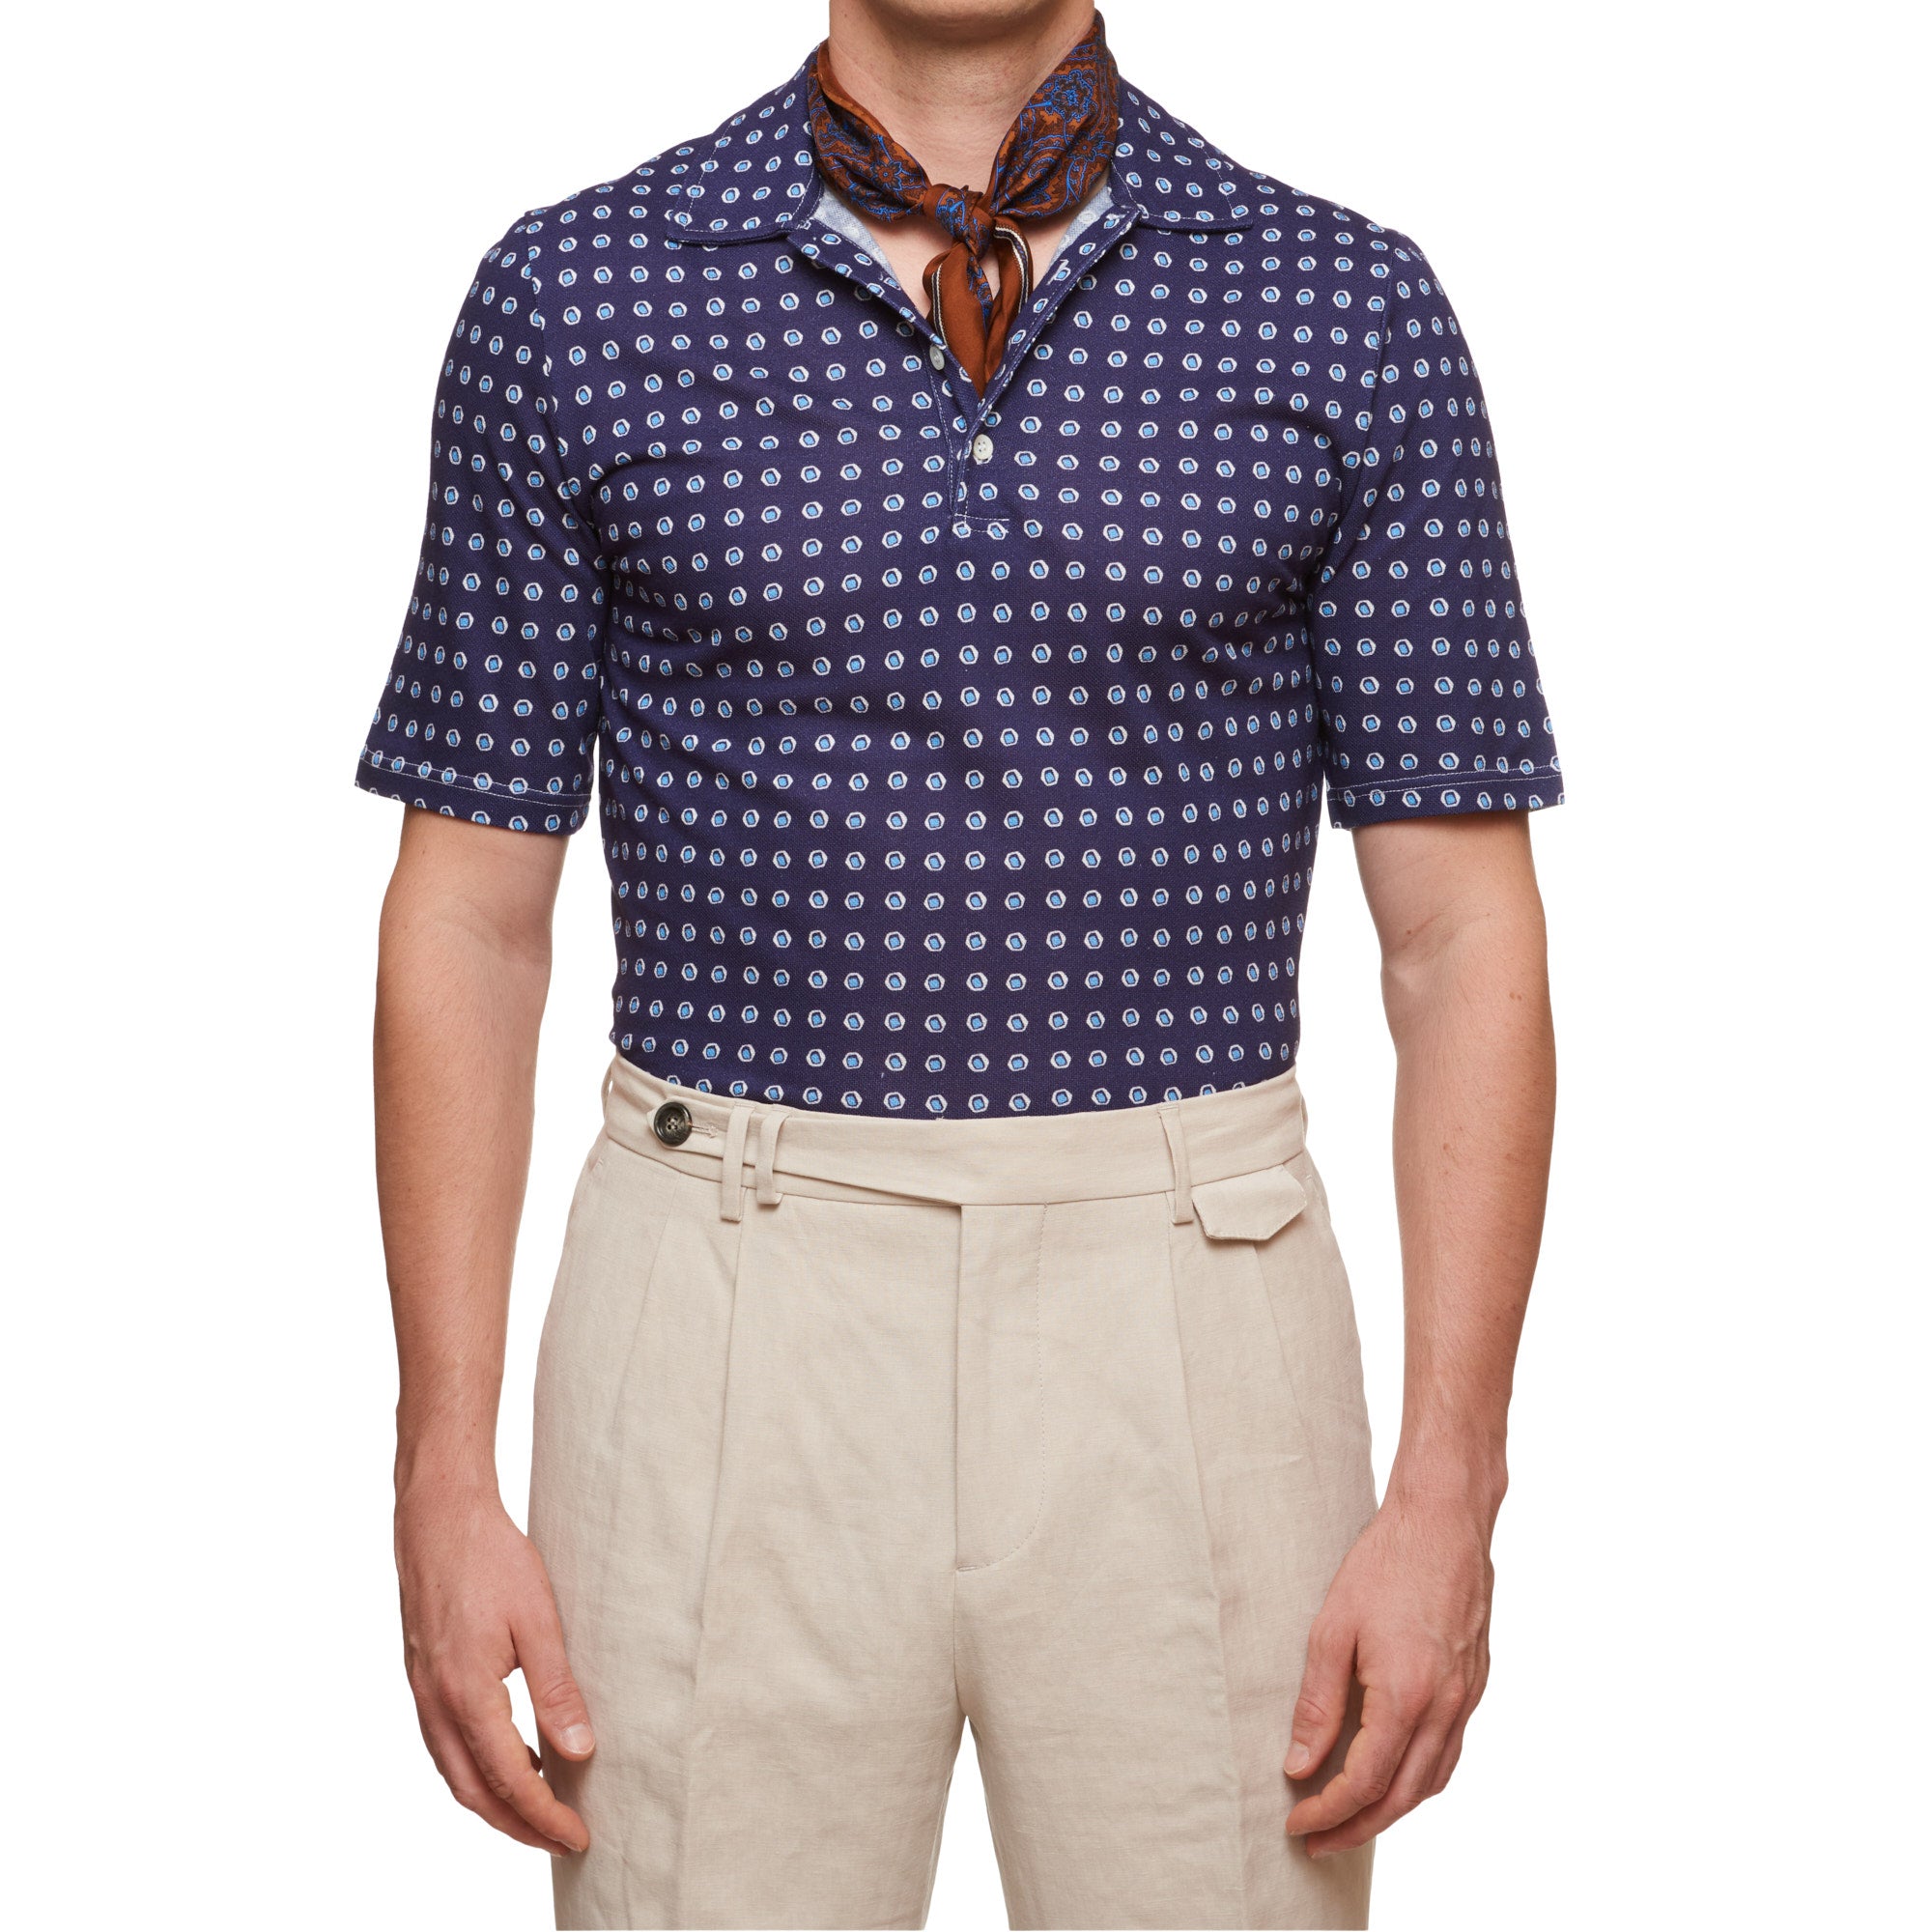 SARTORIO Napoli by KITON Navy Blue Spotted Cotton Pique Short Sleeve Polo Shirt NEW